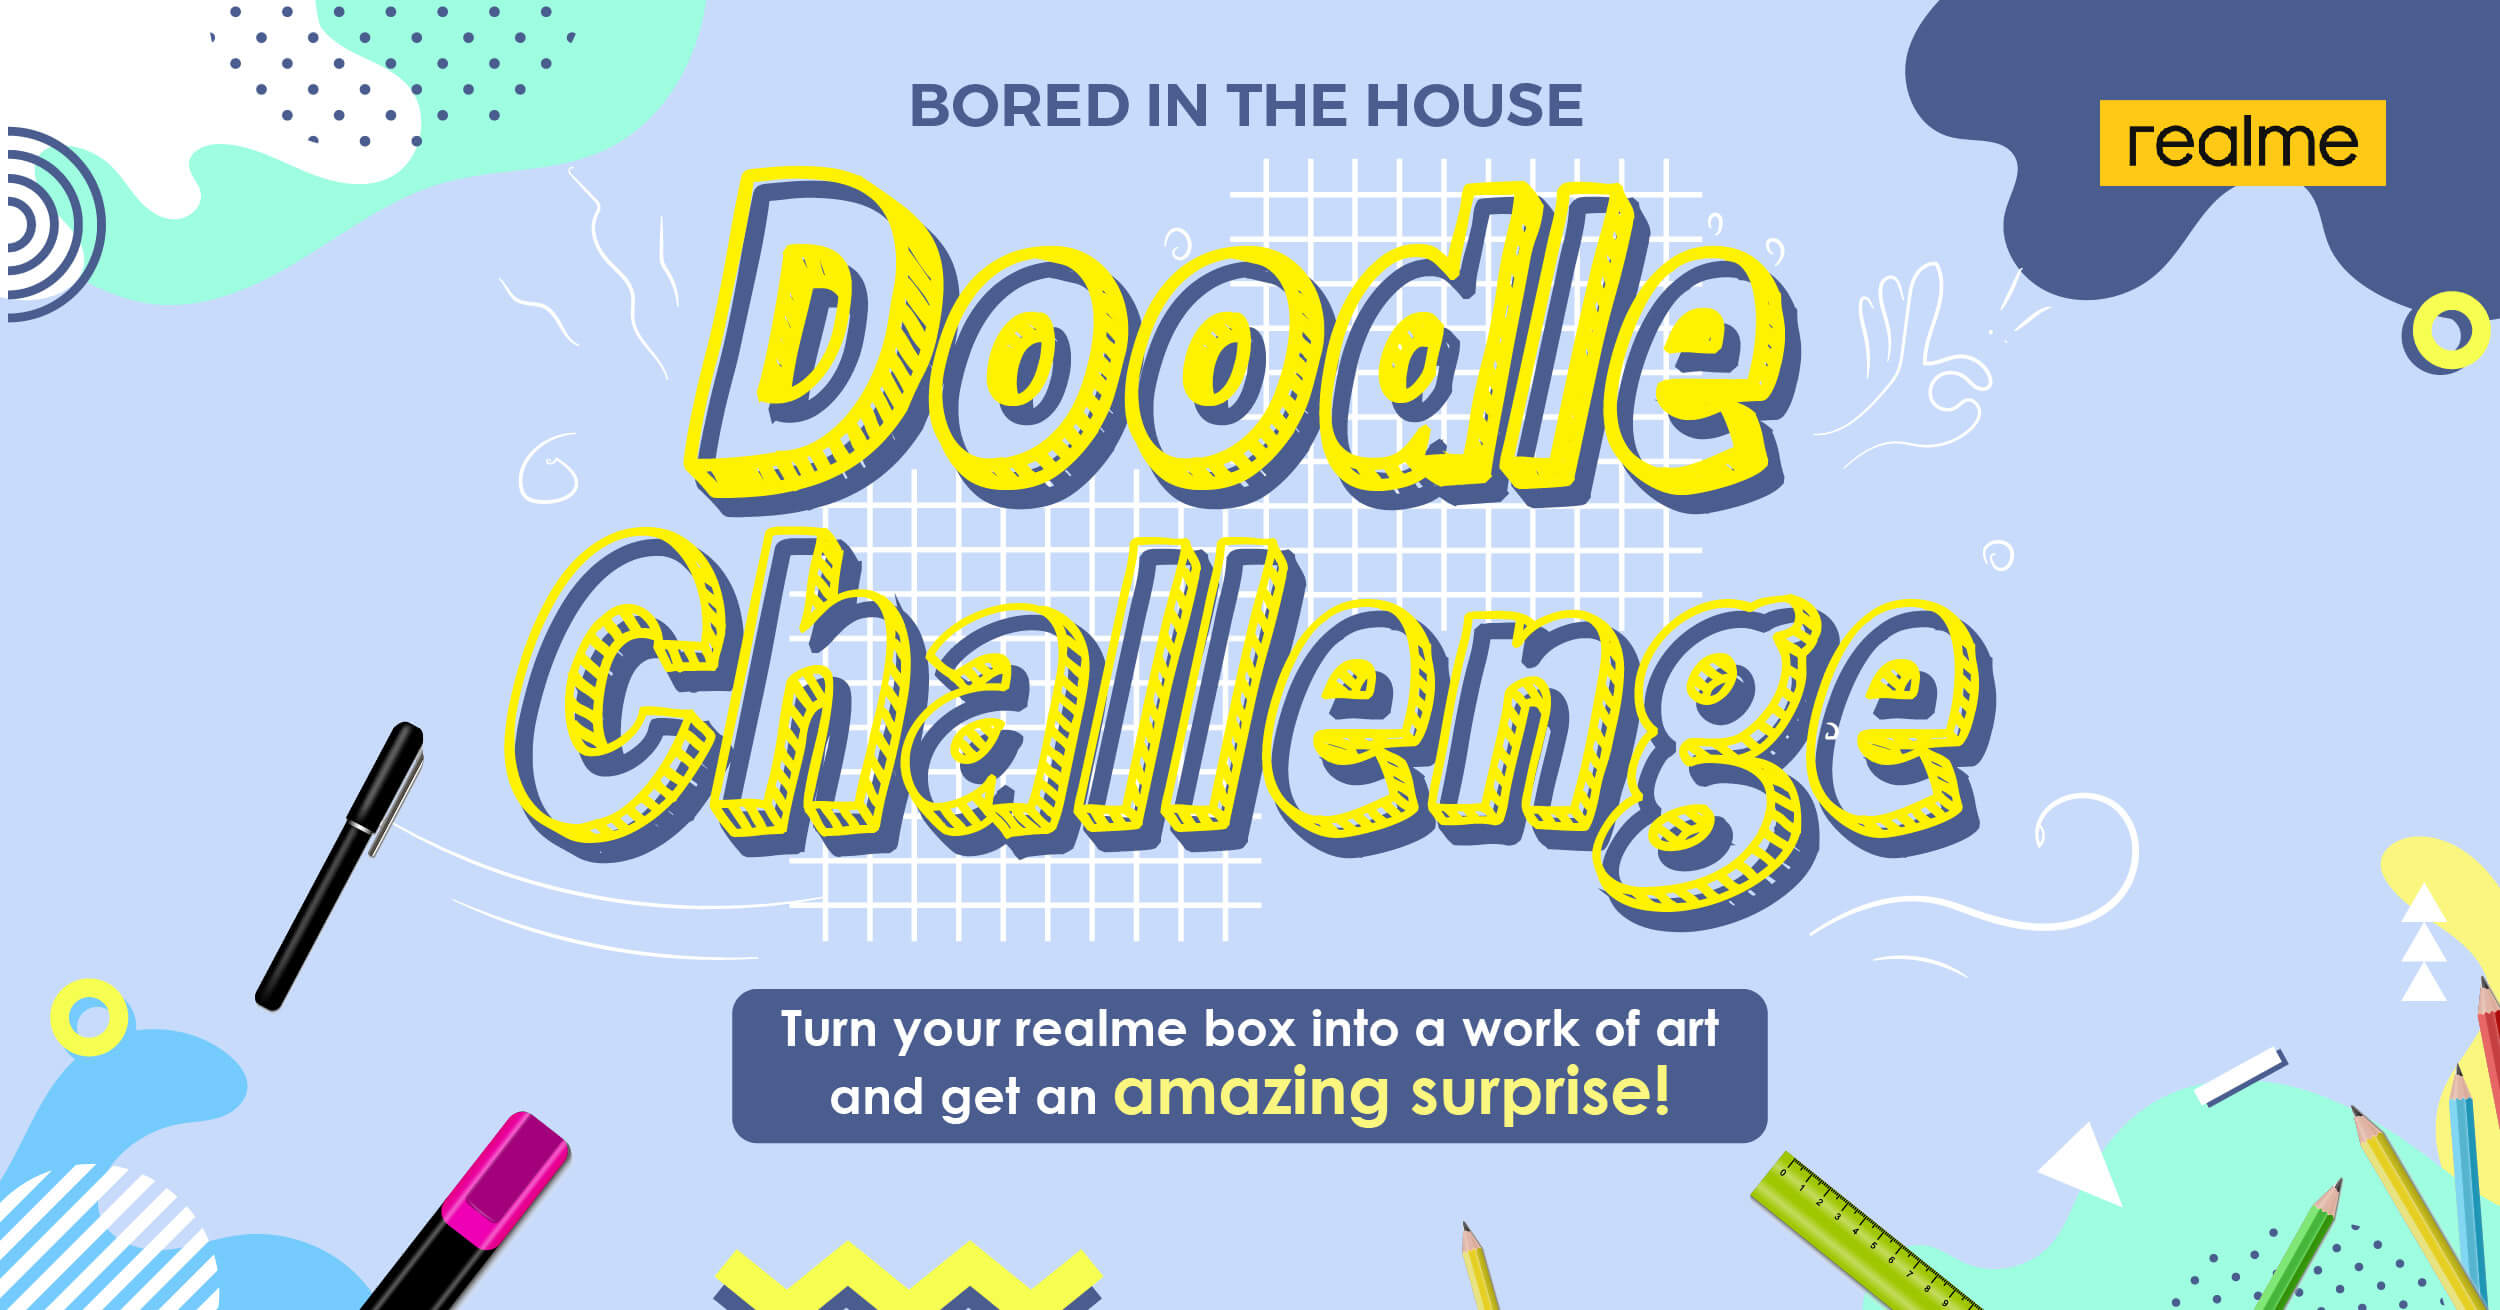 realme doodle challenge (1)